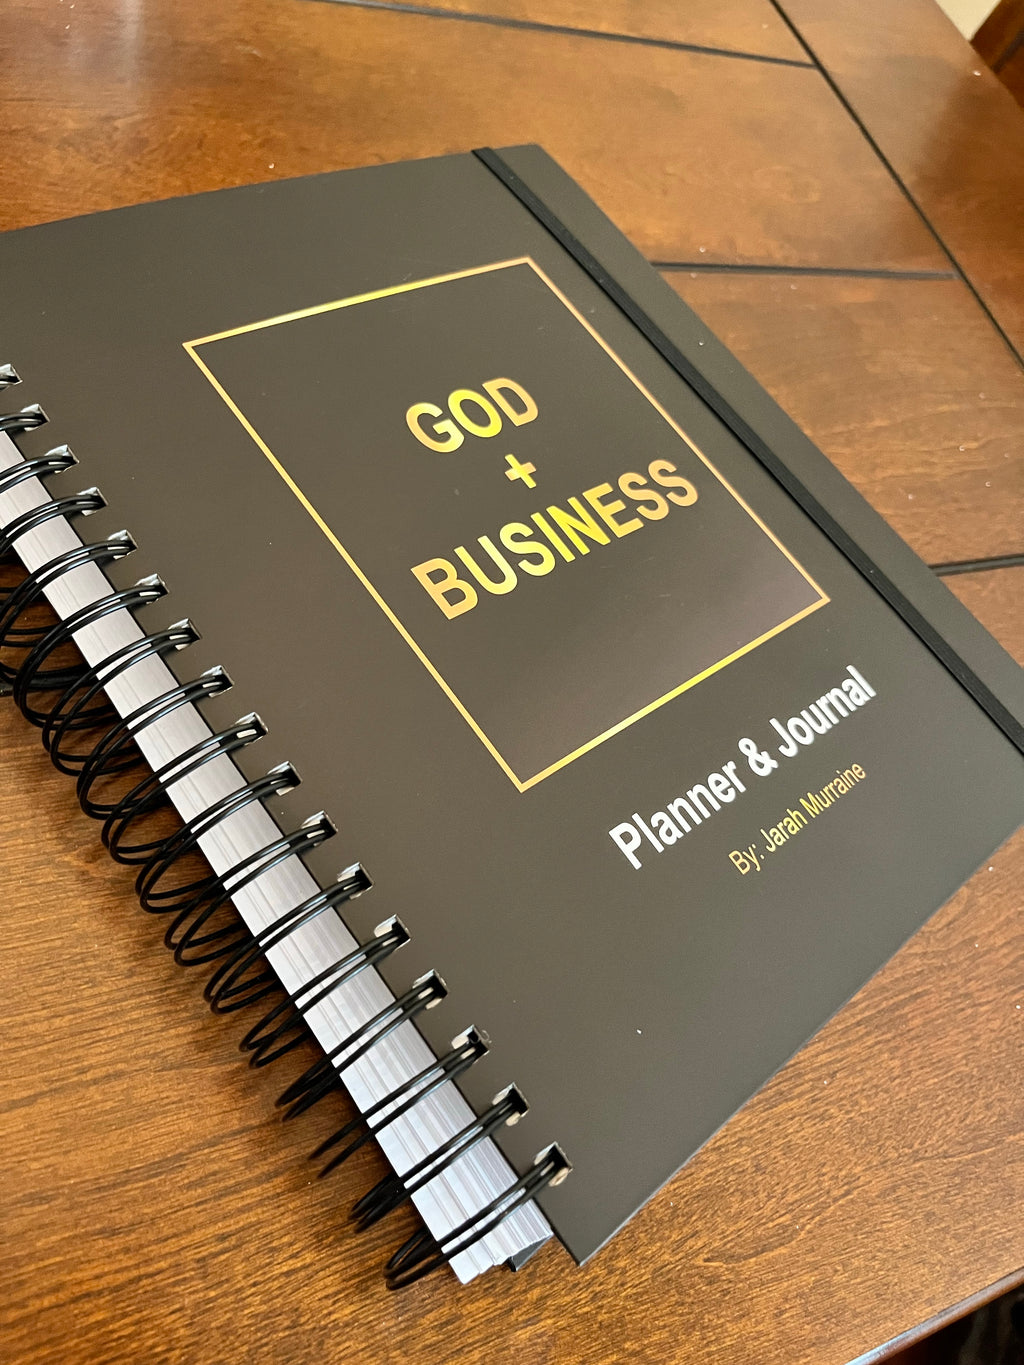 GOD + BUSINESS Planner & Journal